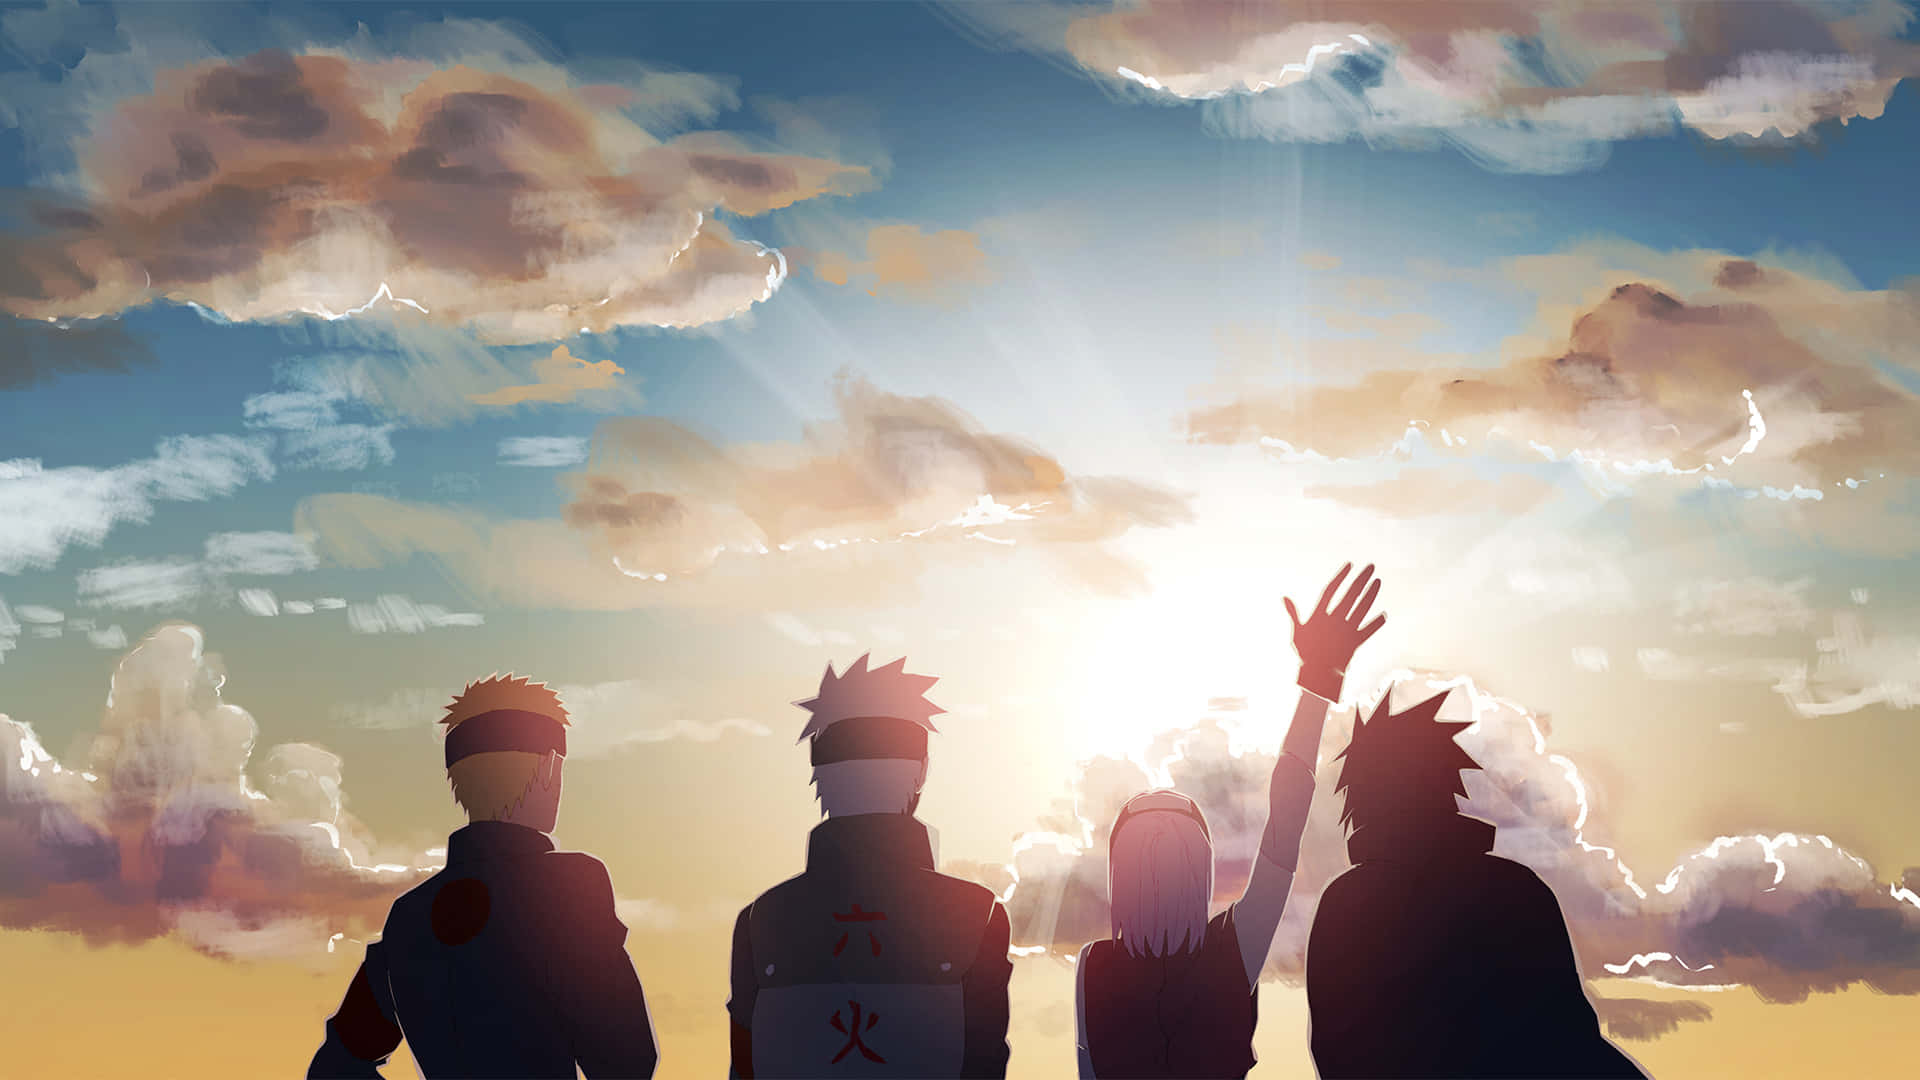 "The three Kakashi, Naruto and Sasuke stand united." Wallpaper